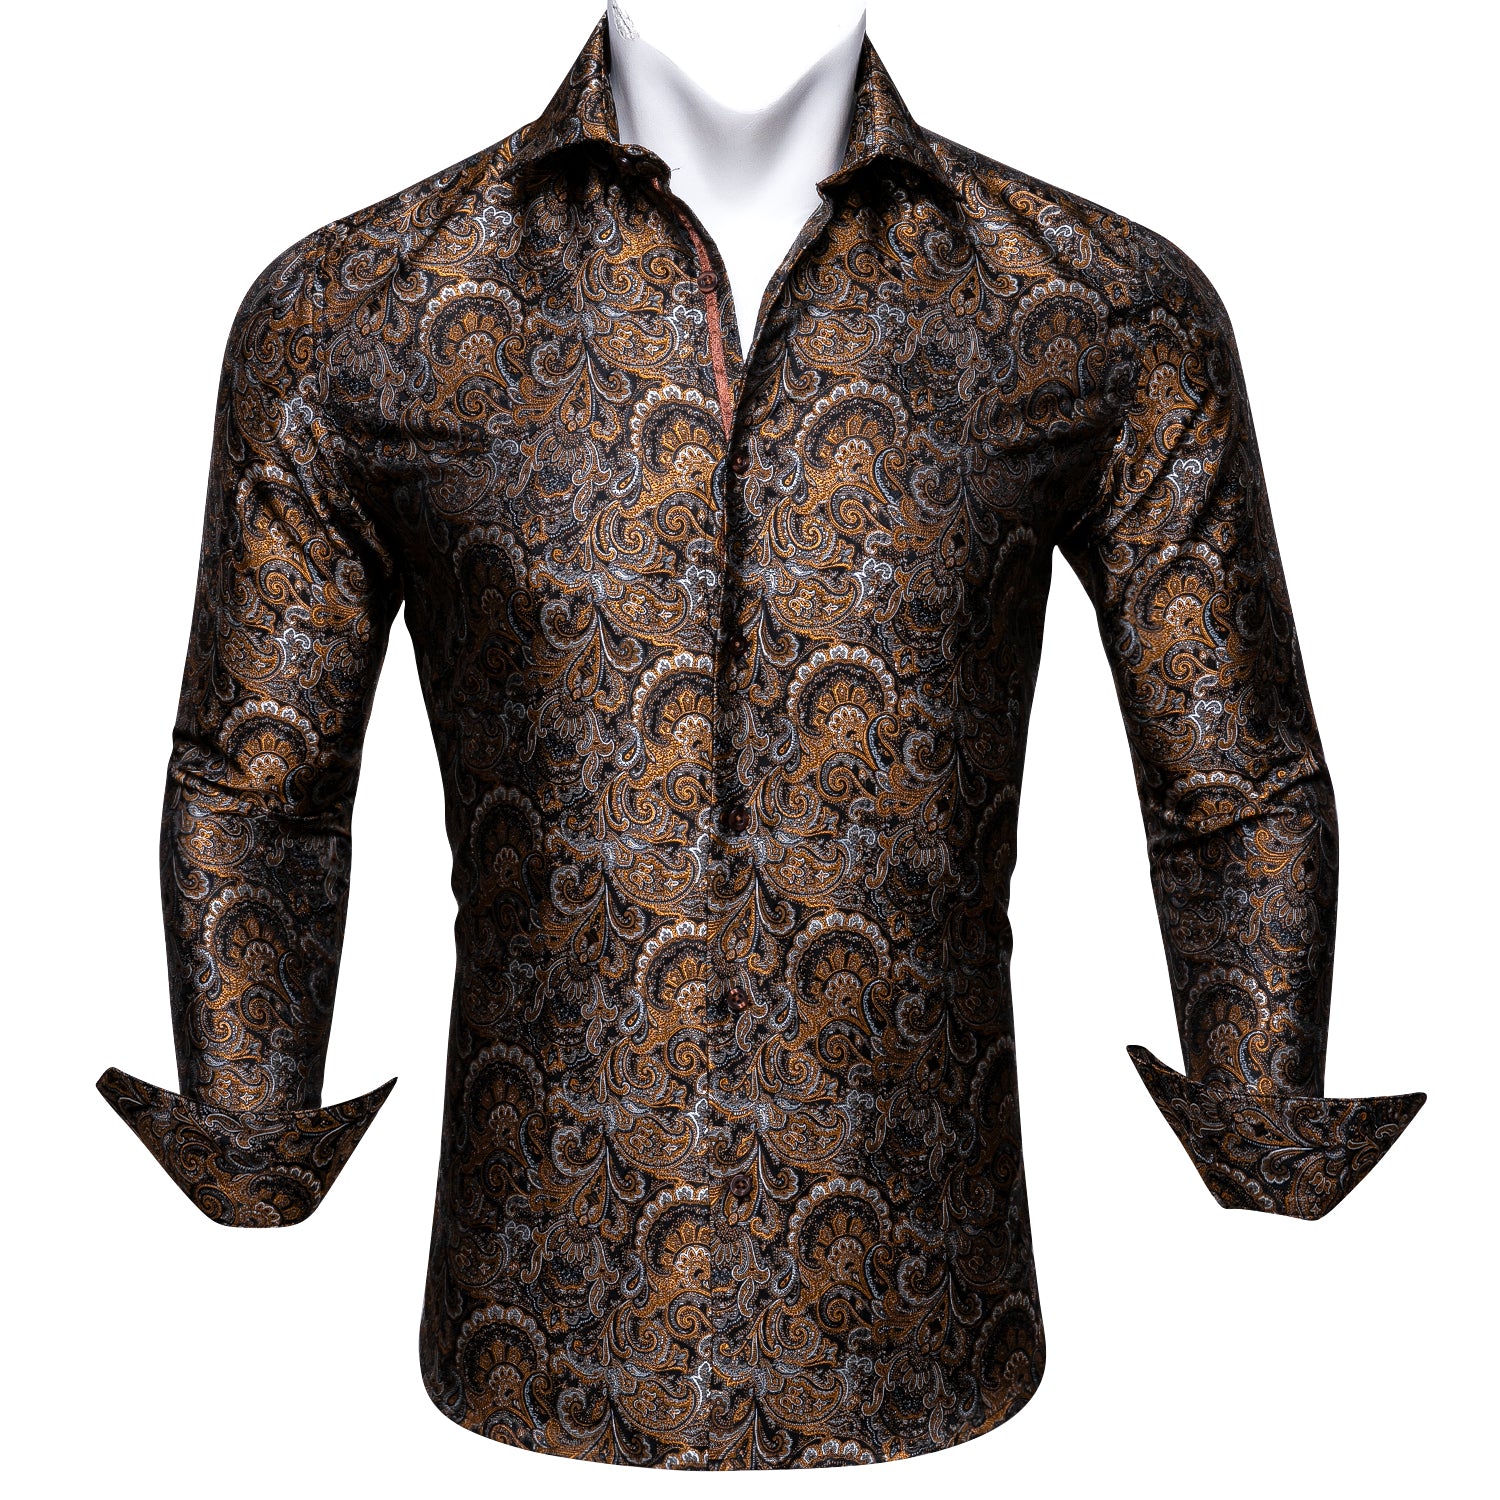 Barry.wang Fashionable Black Golden Silk Paisley Tribal Long Sleeve Daily Tops Men's Shirt